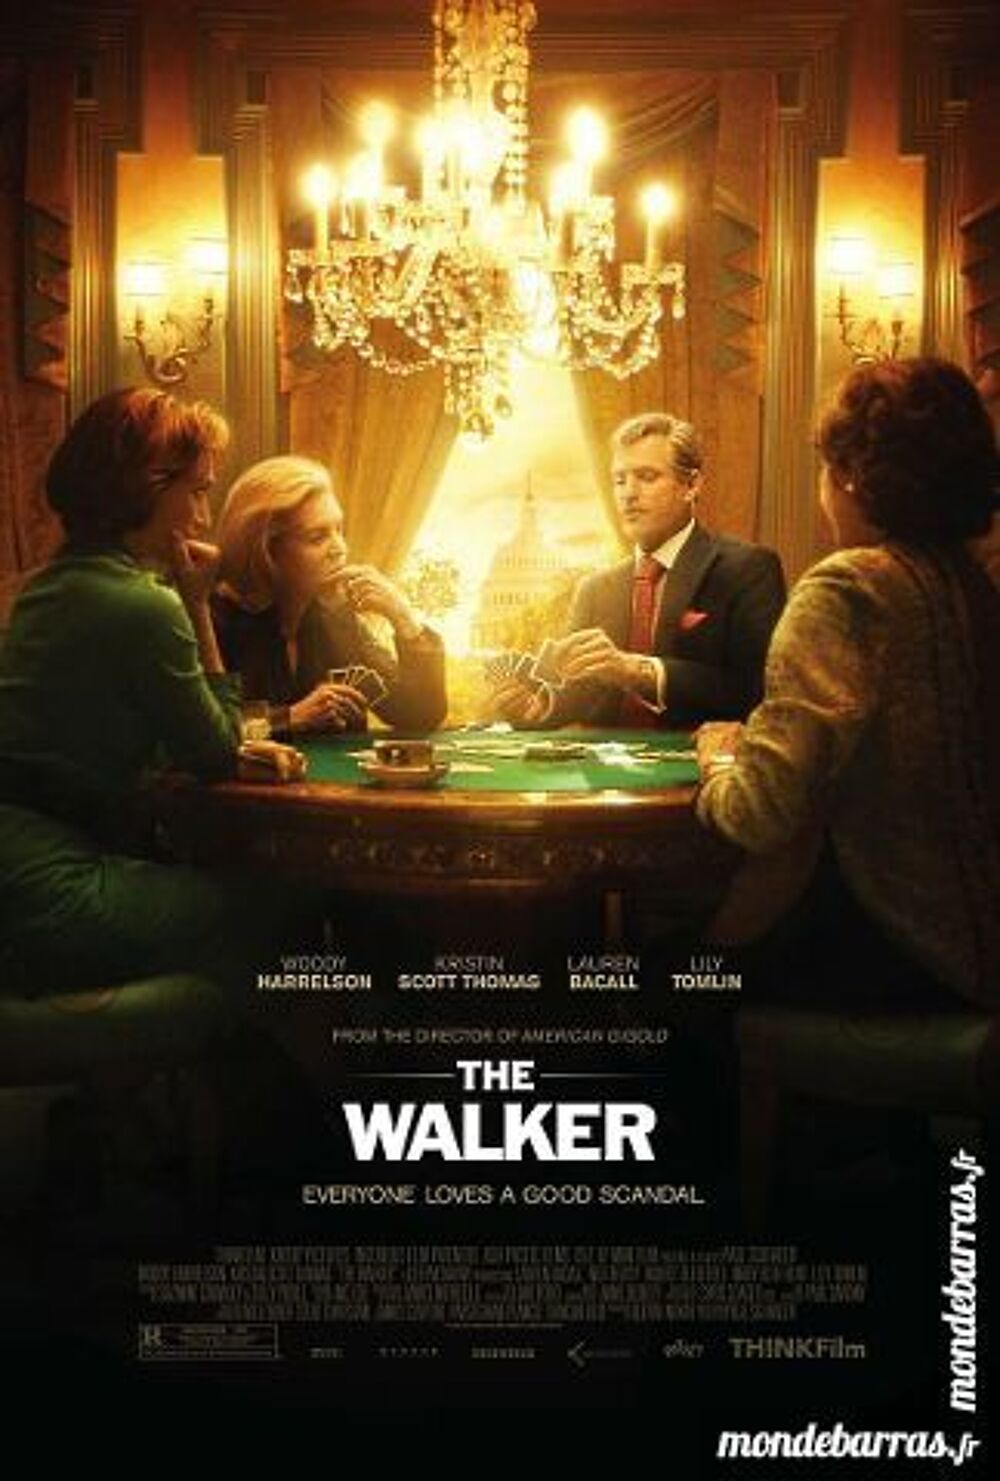 K7 Vhs: The Walker (107) DVD et blu-ray